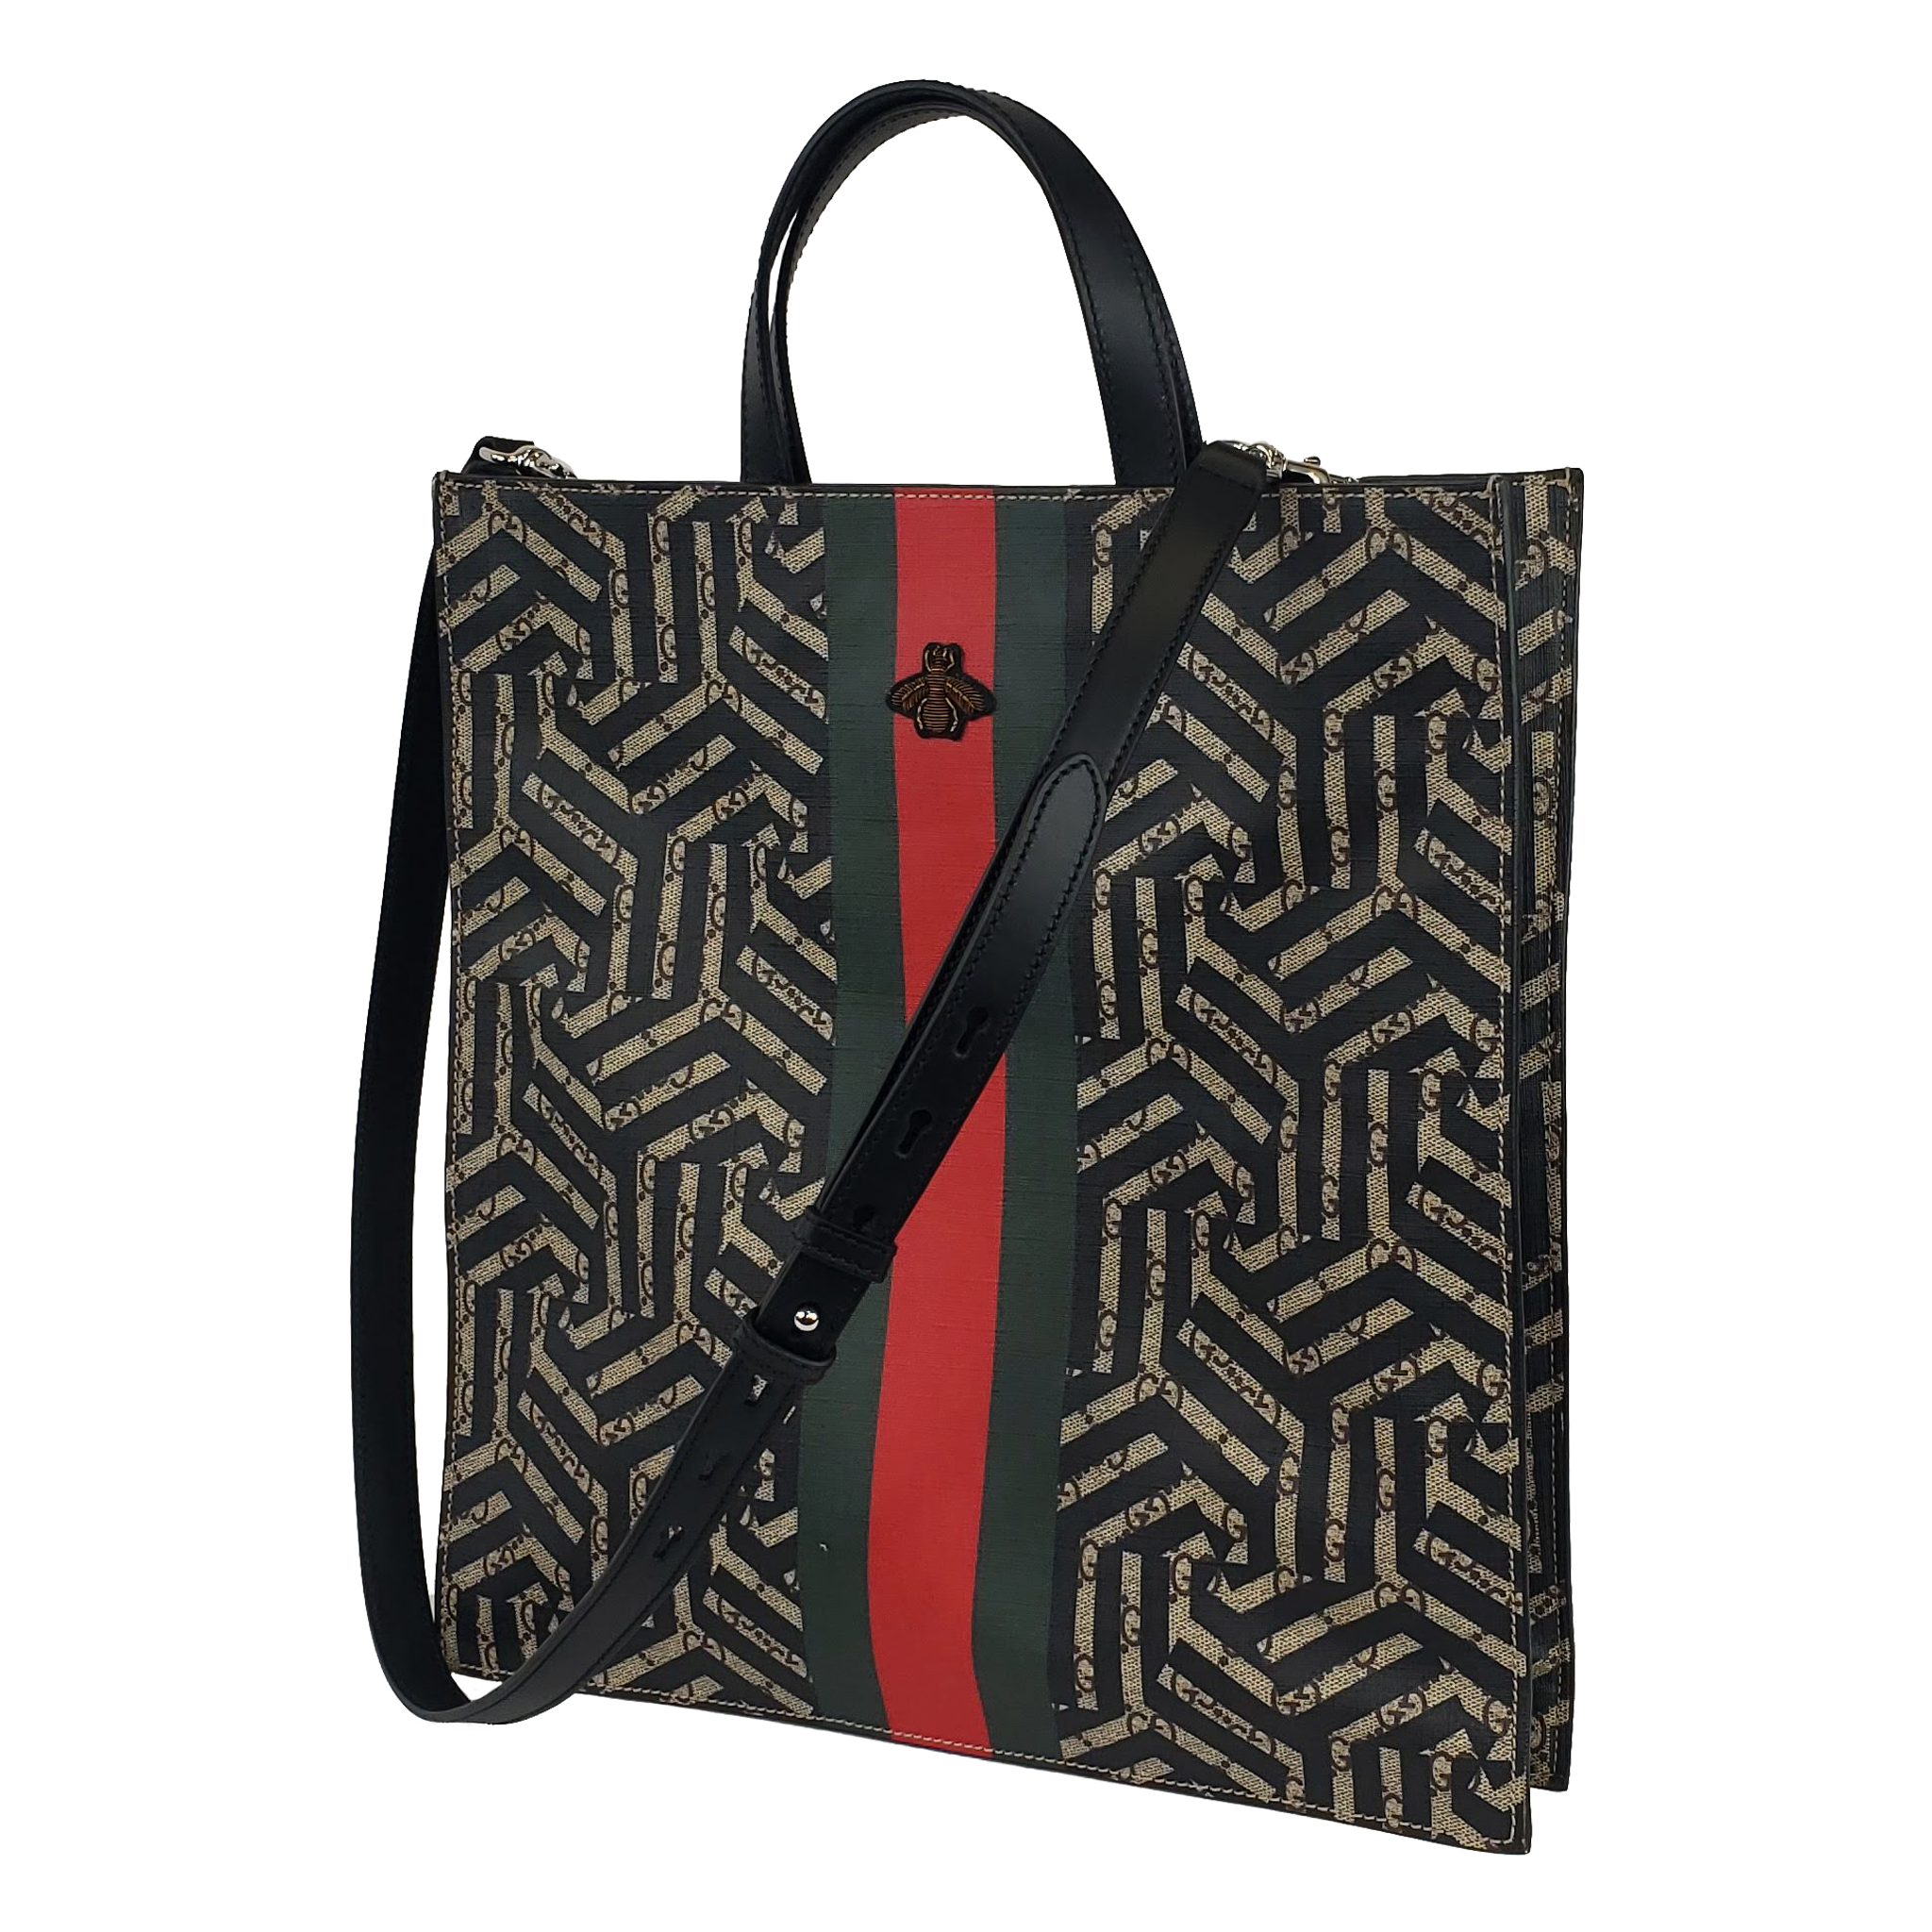 Gucci bee logo embellished bag  Gucci bee bag, Black gucci bag, Bags